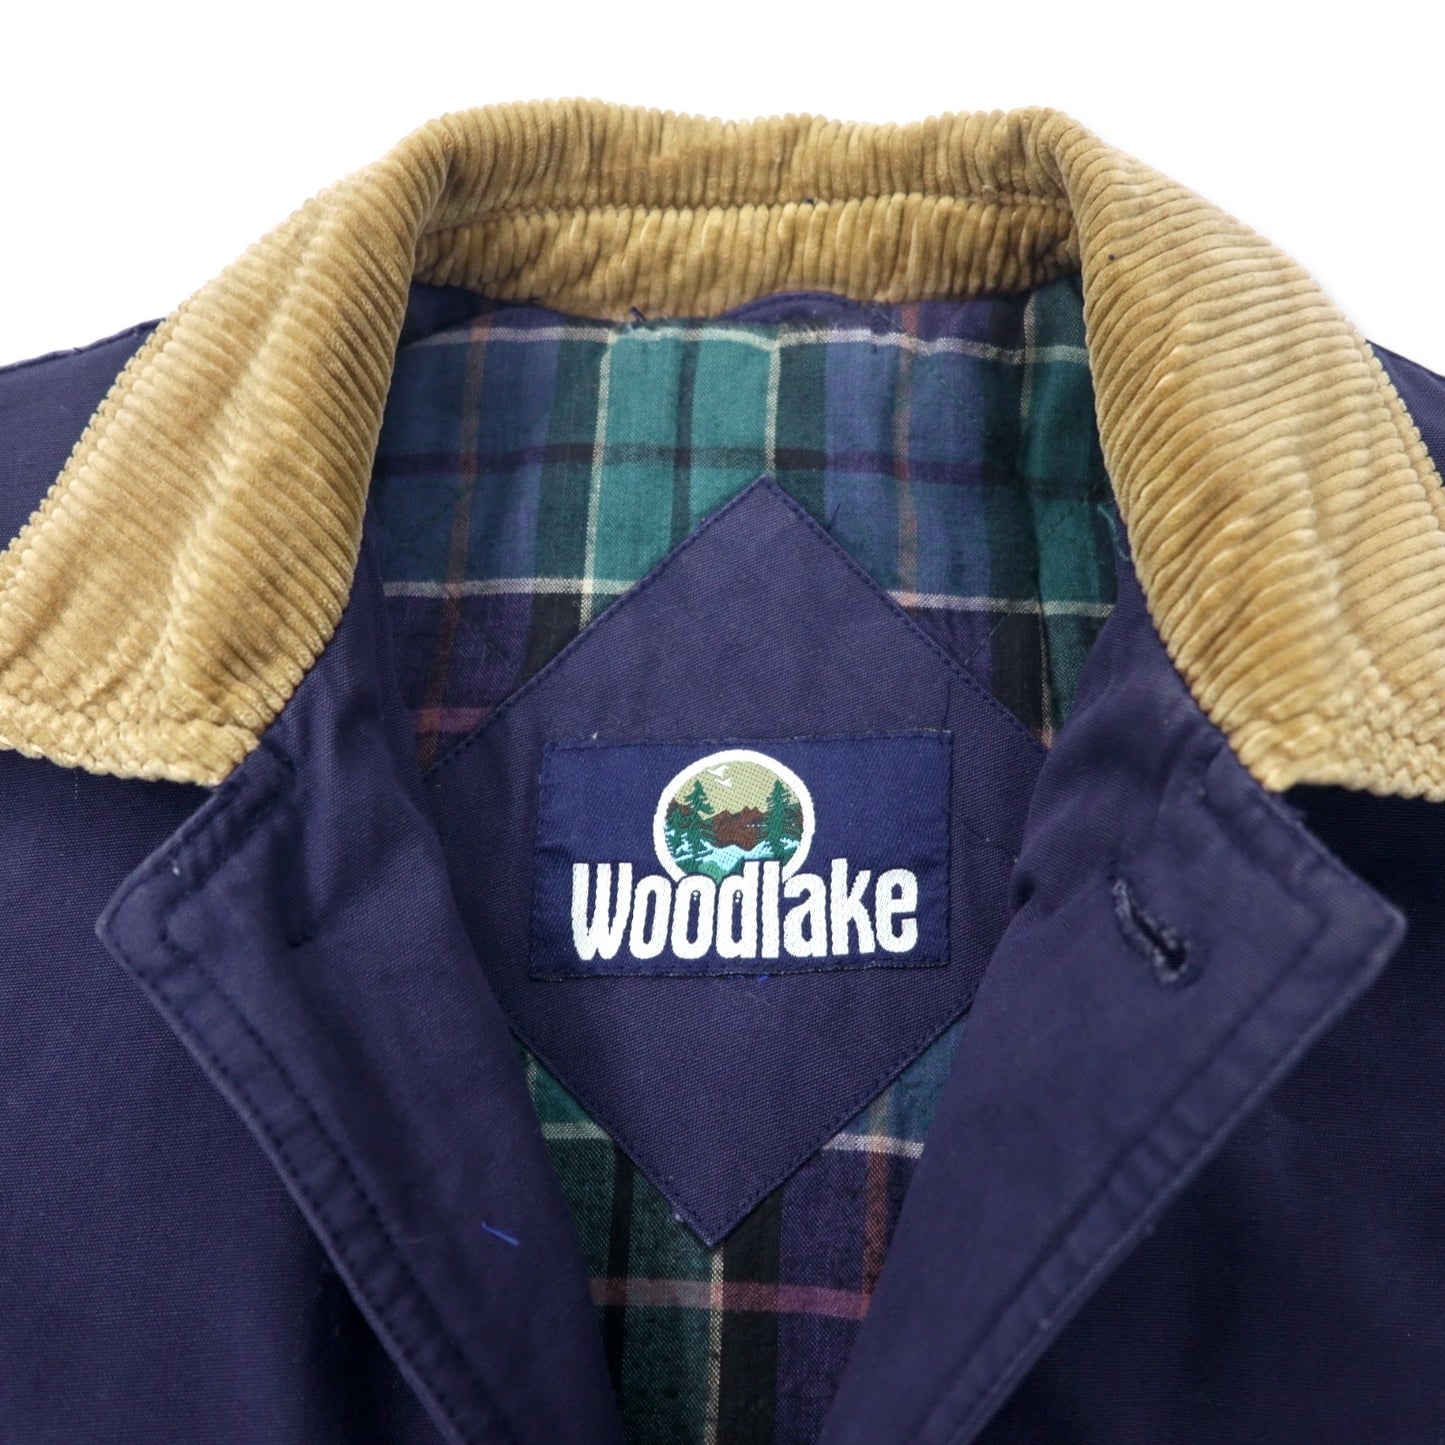 Woodlake 90年代 ダック ハンティングジャケット カバーオール XL ネイビー コットン 裏地チェック 襟コーデュロイ